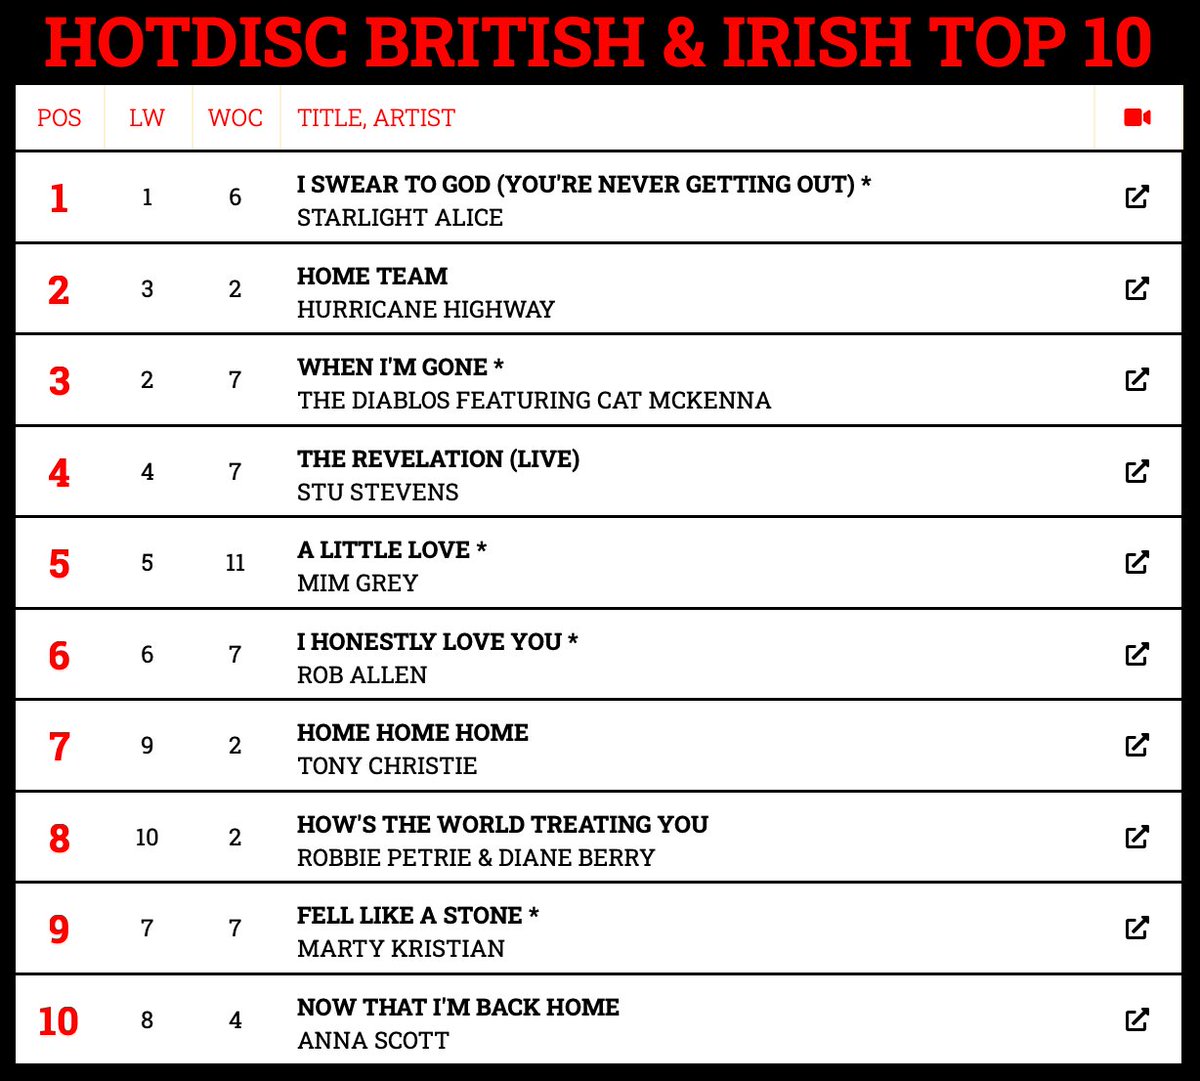 Hotdisc Top 10 British & Irish Chart - 14.4.24 @mimgrey @AllCountryRadio @foreverfbc @ScarletRiverPR @tonychristie @Annascottartist